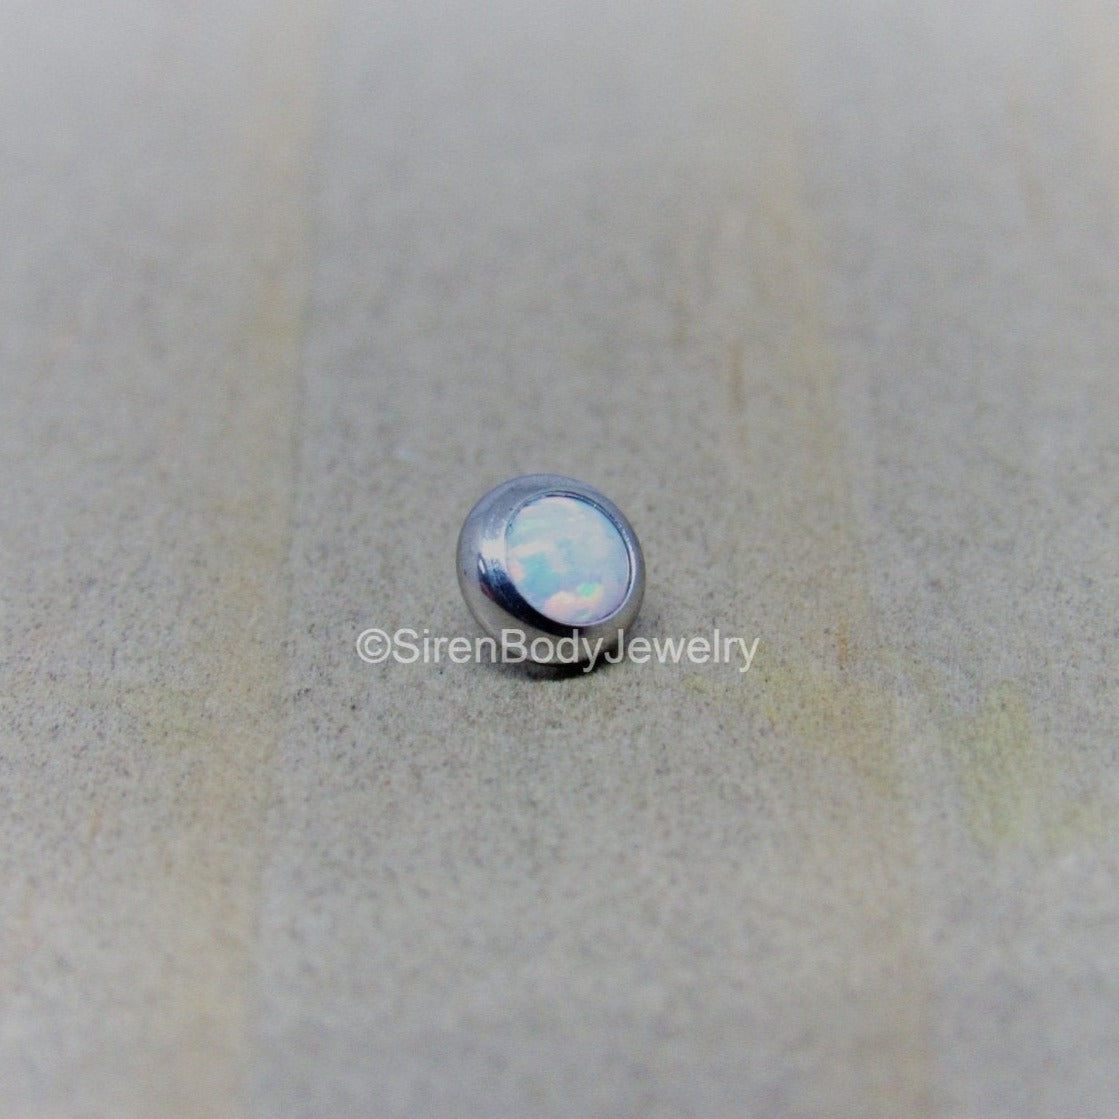 16g 3mm white opal labret stud earring flat back